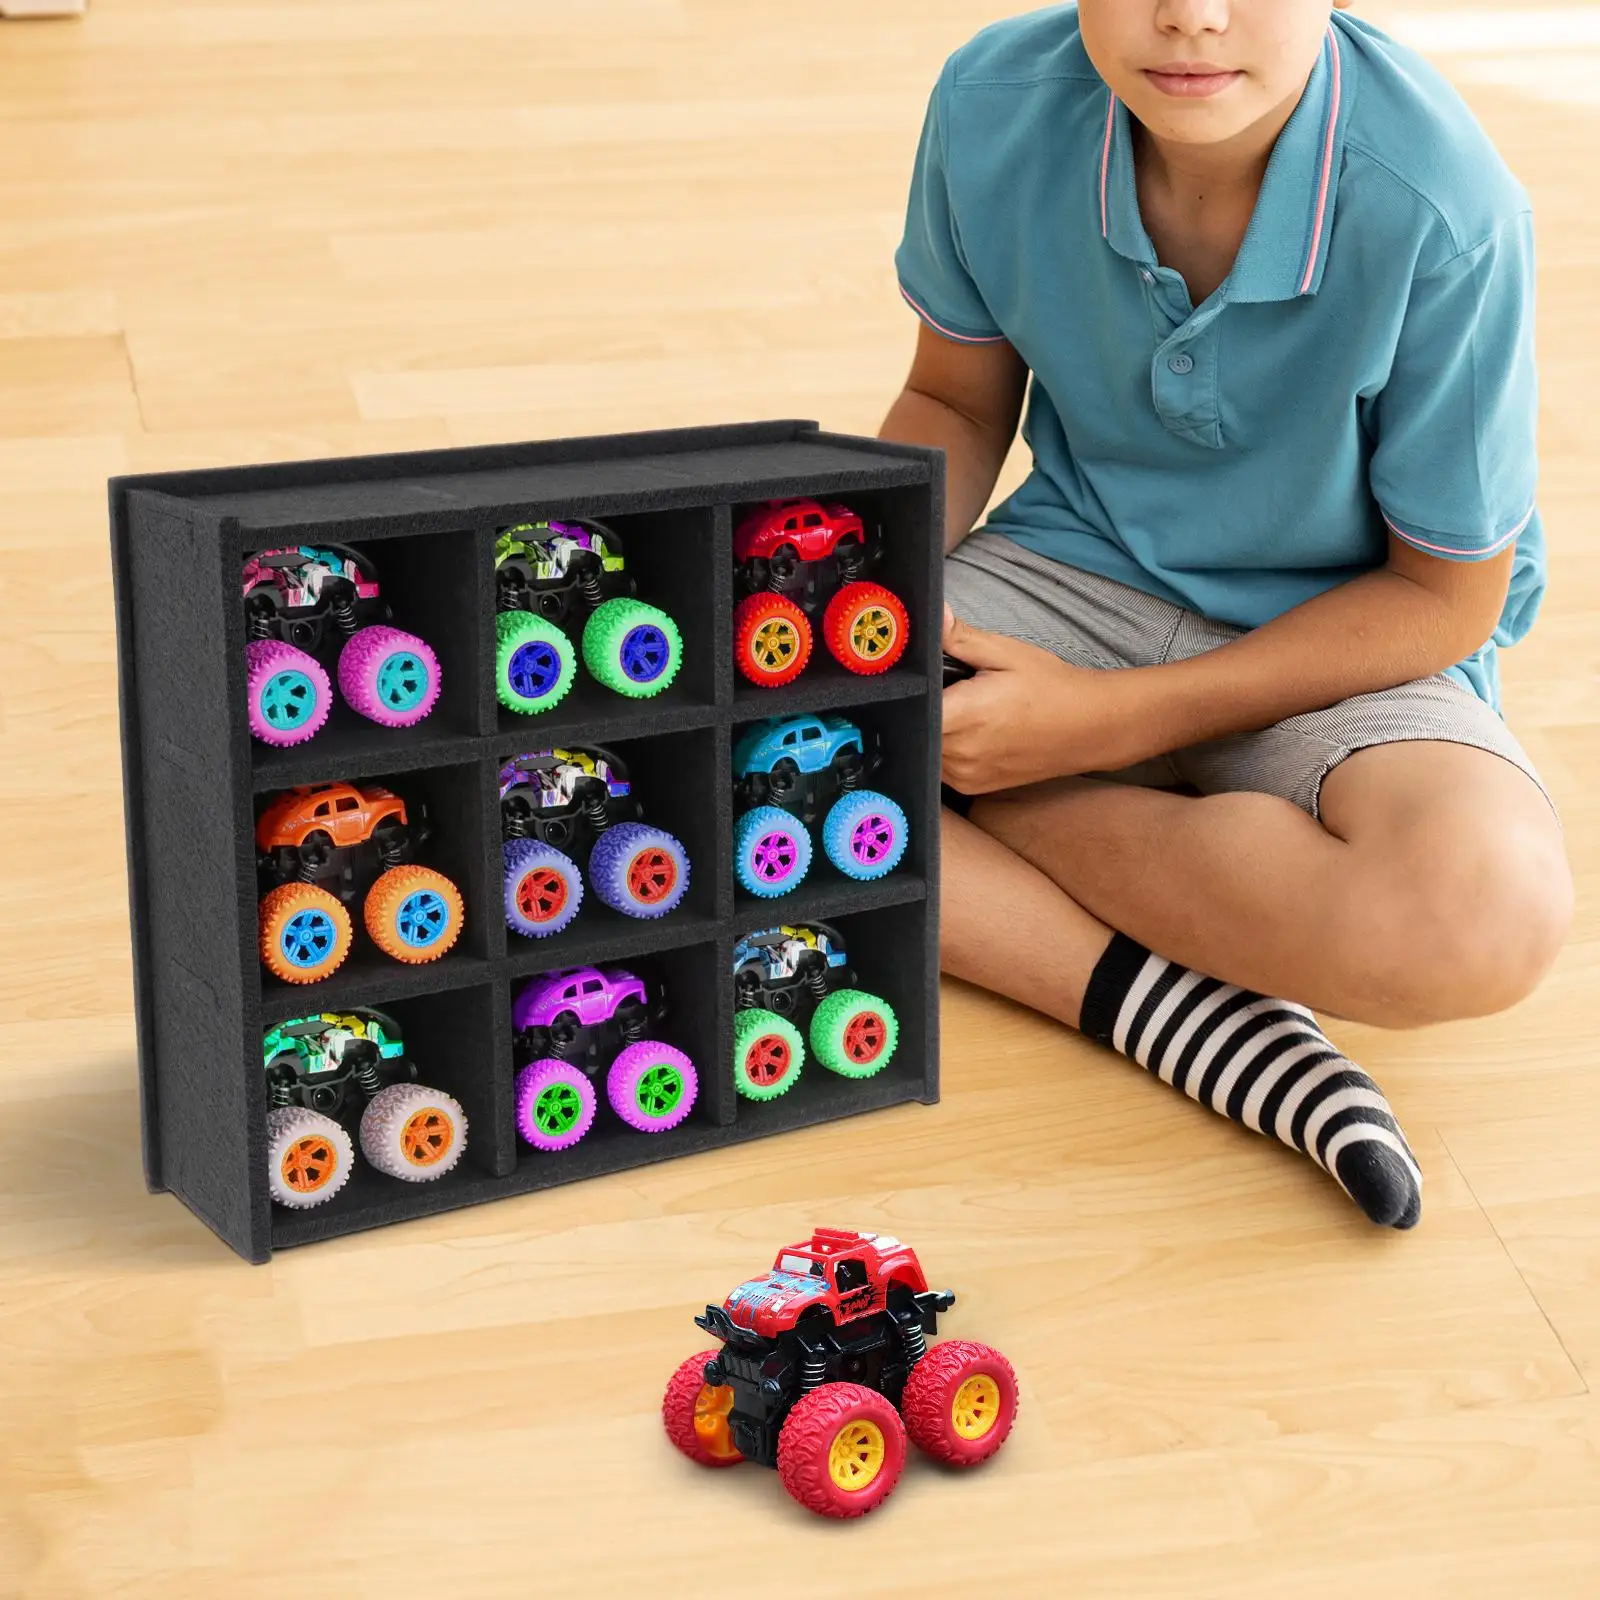 Monster Trucks Toy Wall Mount Display Case with 9 Slots Black Color Inside Each Slot 10cmx8.5cm DIY Assembled for Children